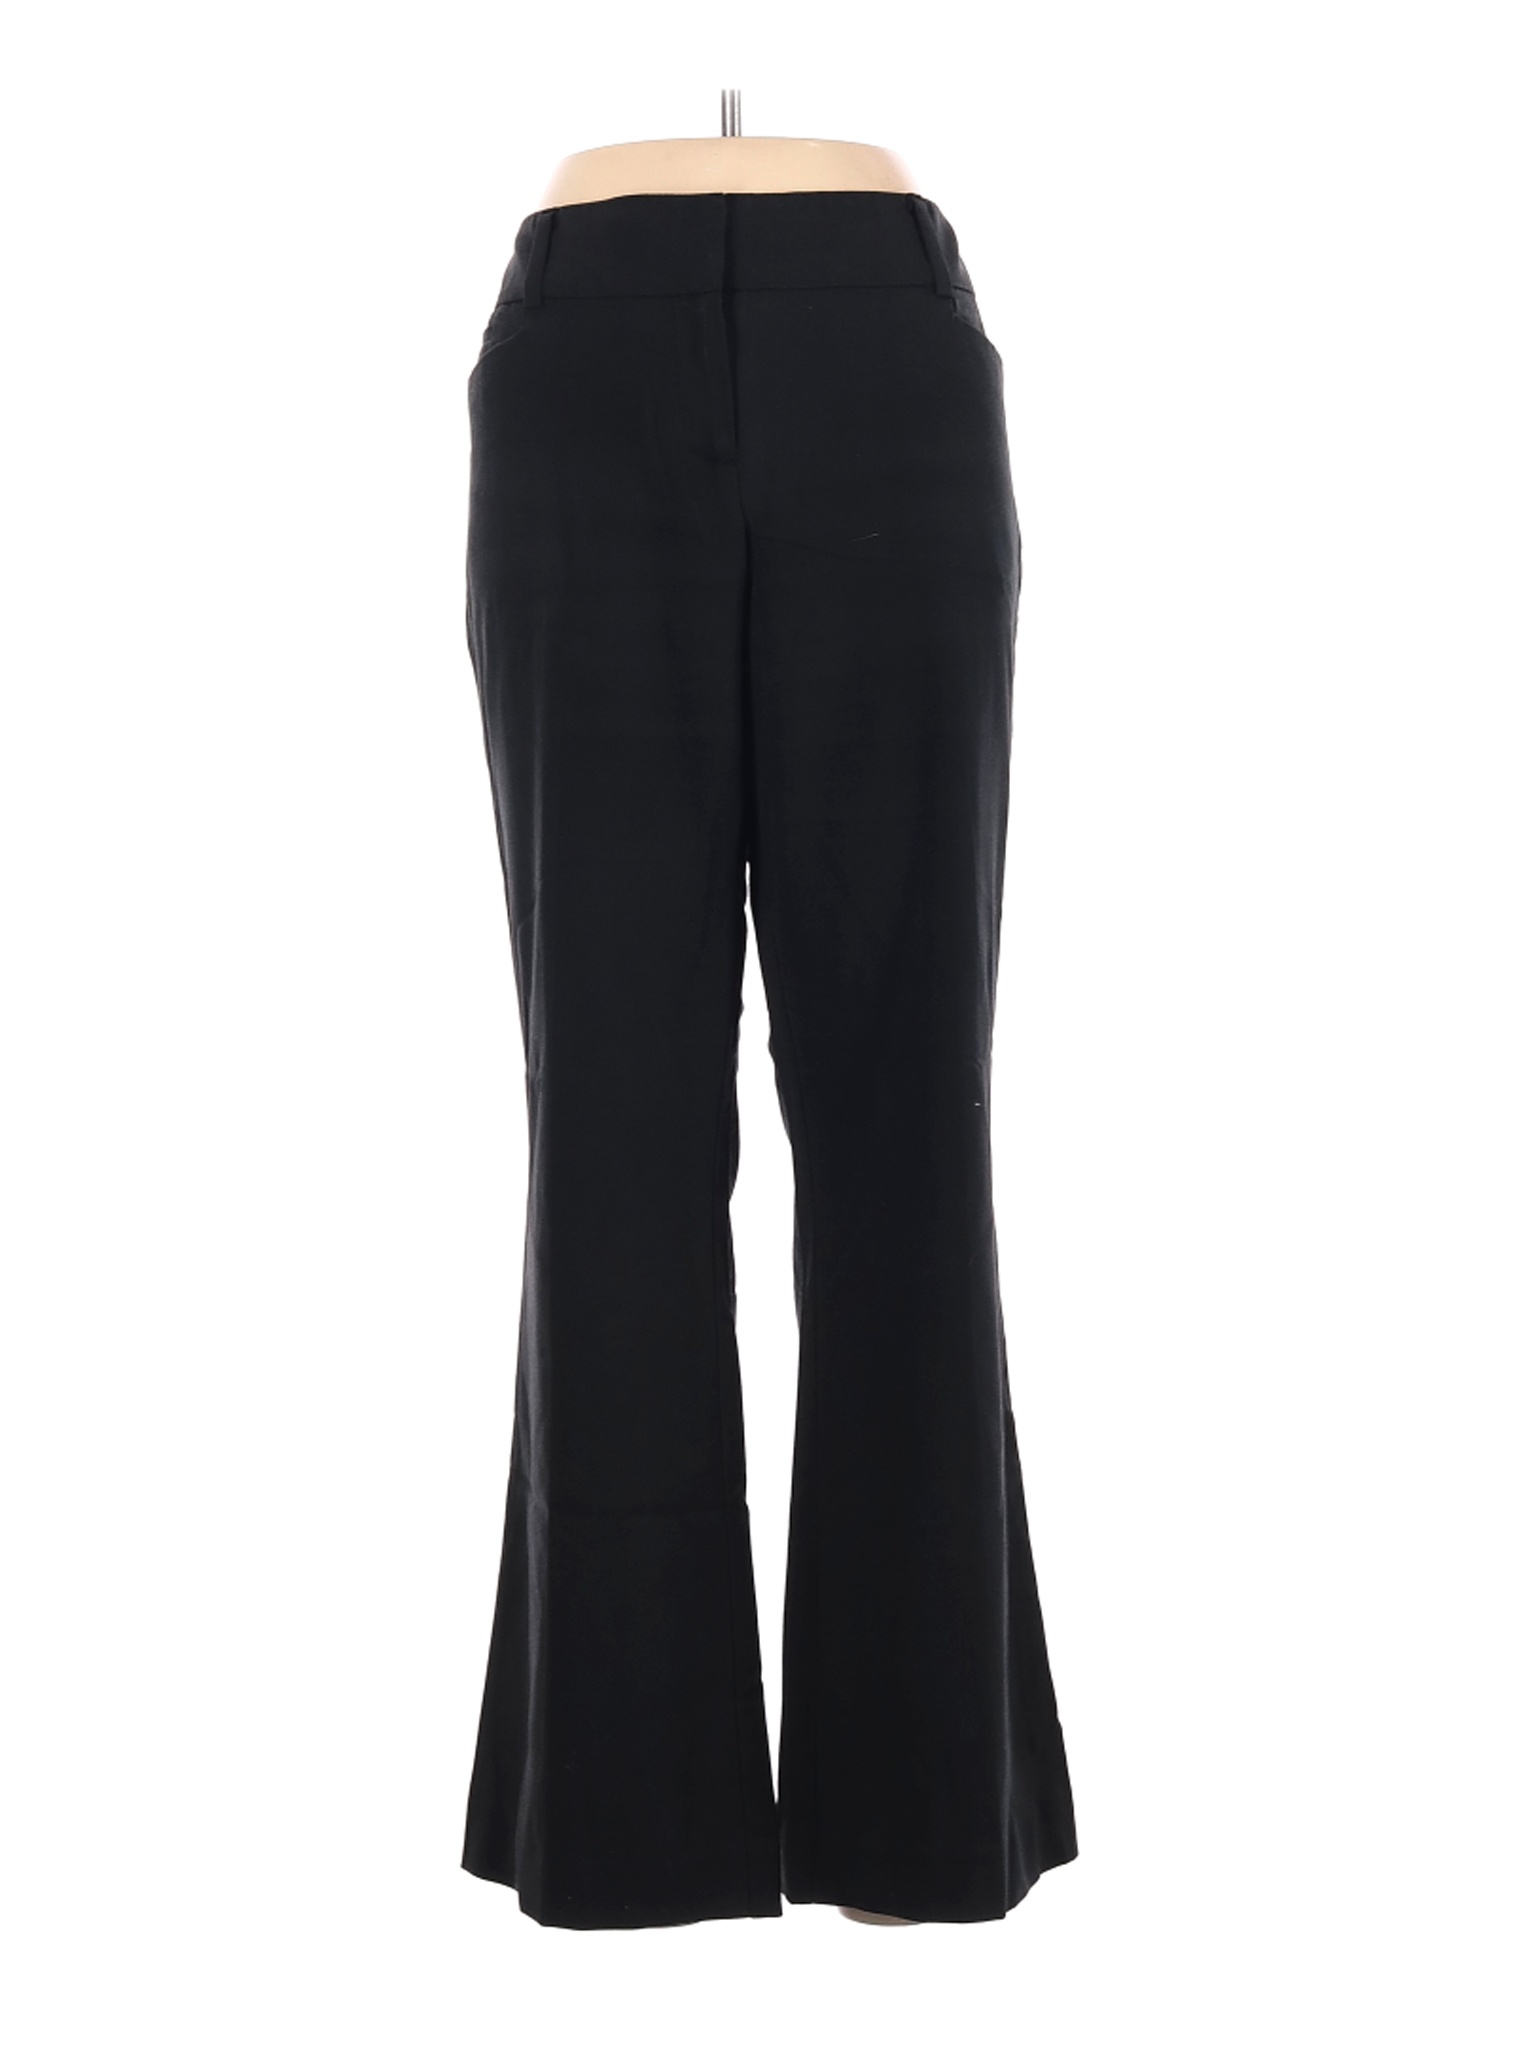 New York & Company Women Black Dress Pants 12 Petites | eBay